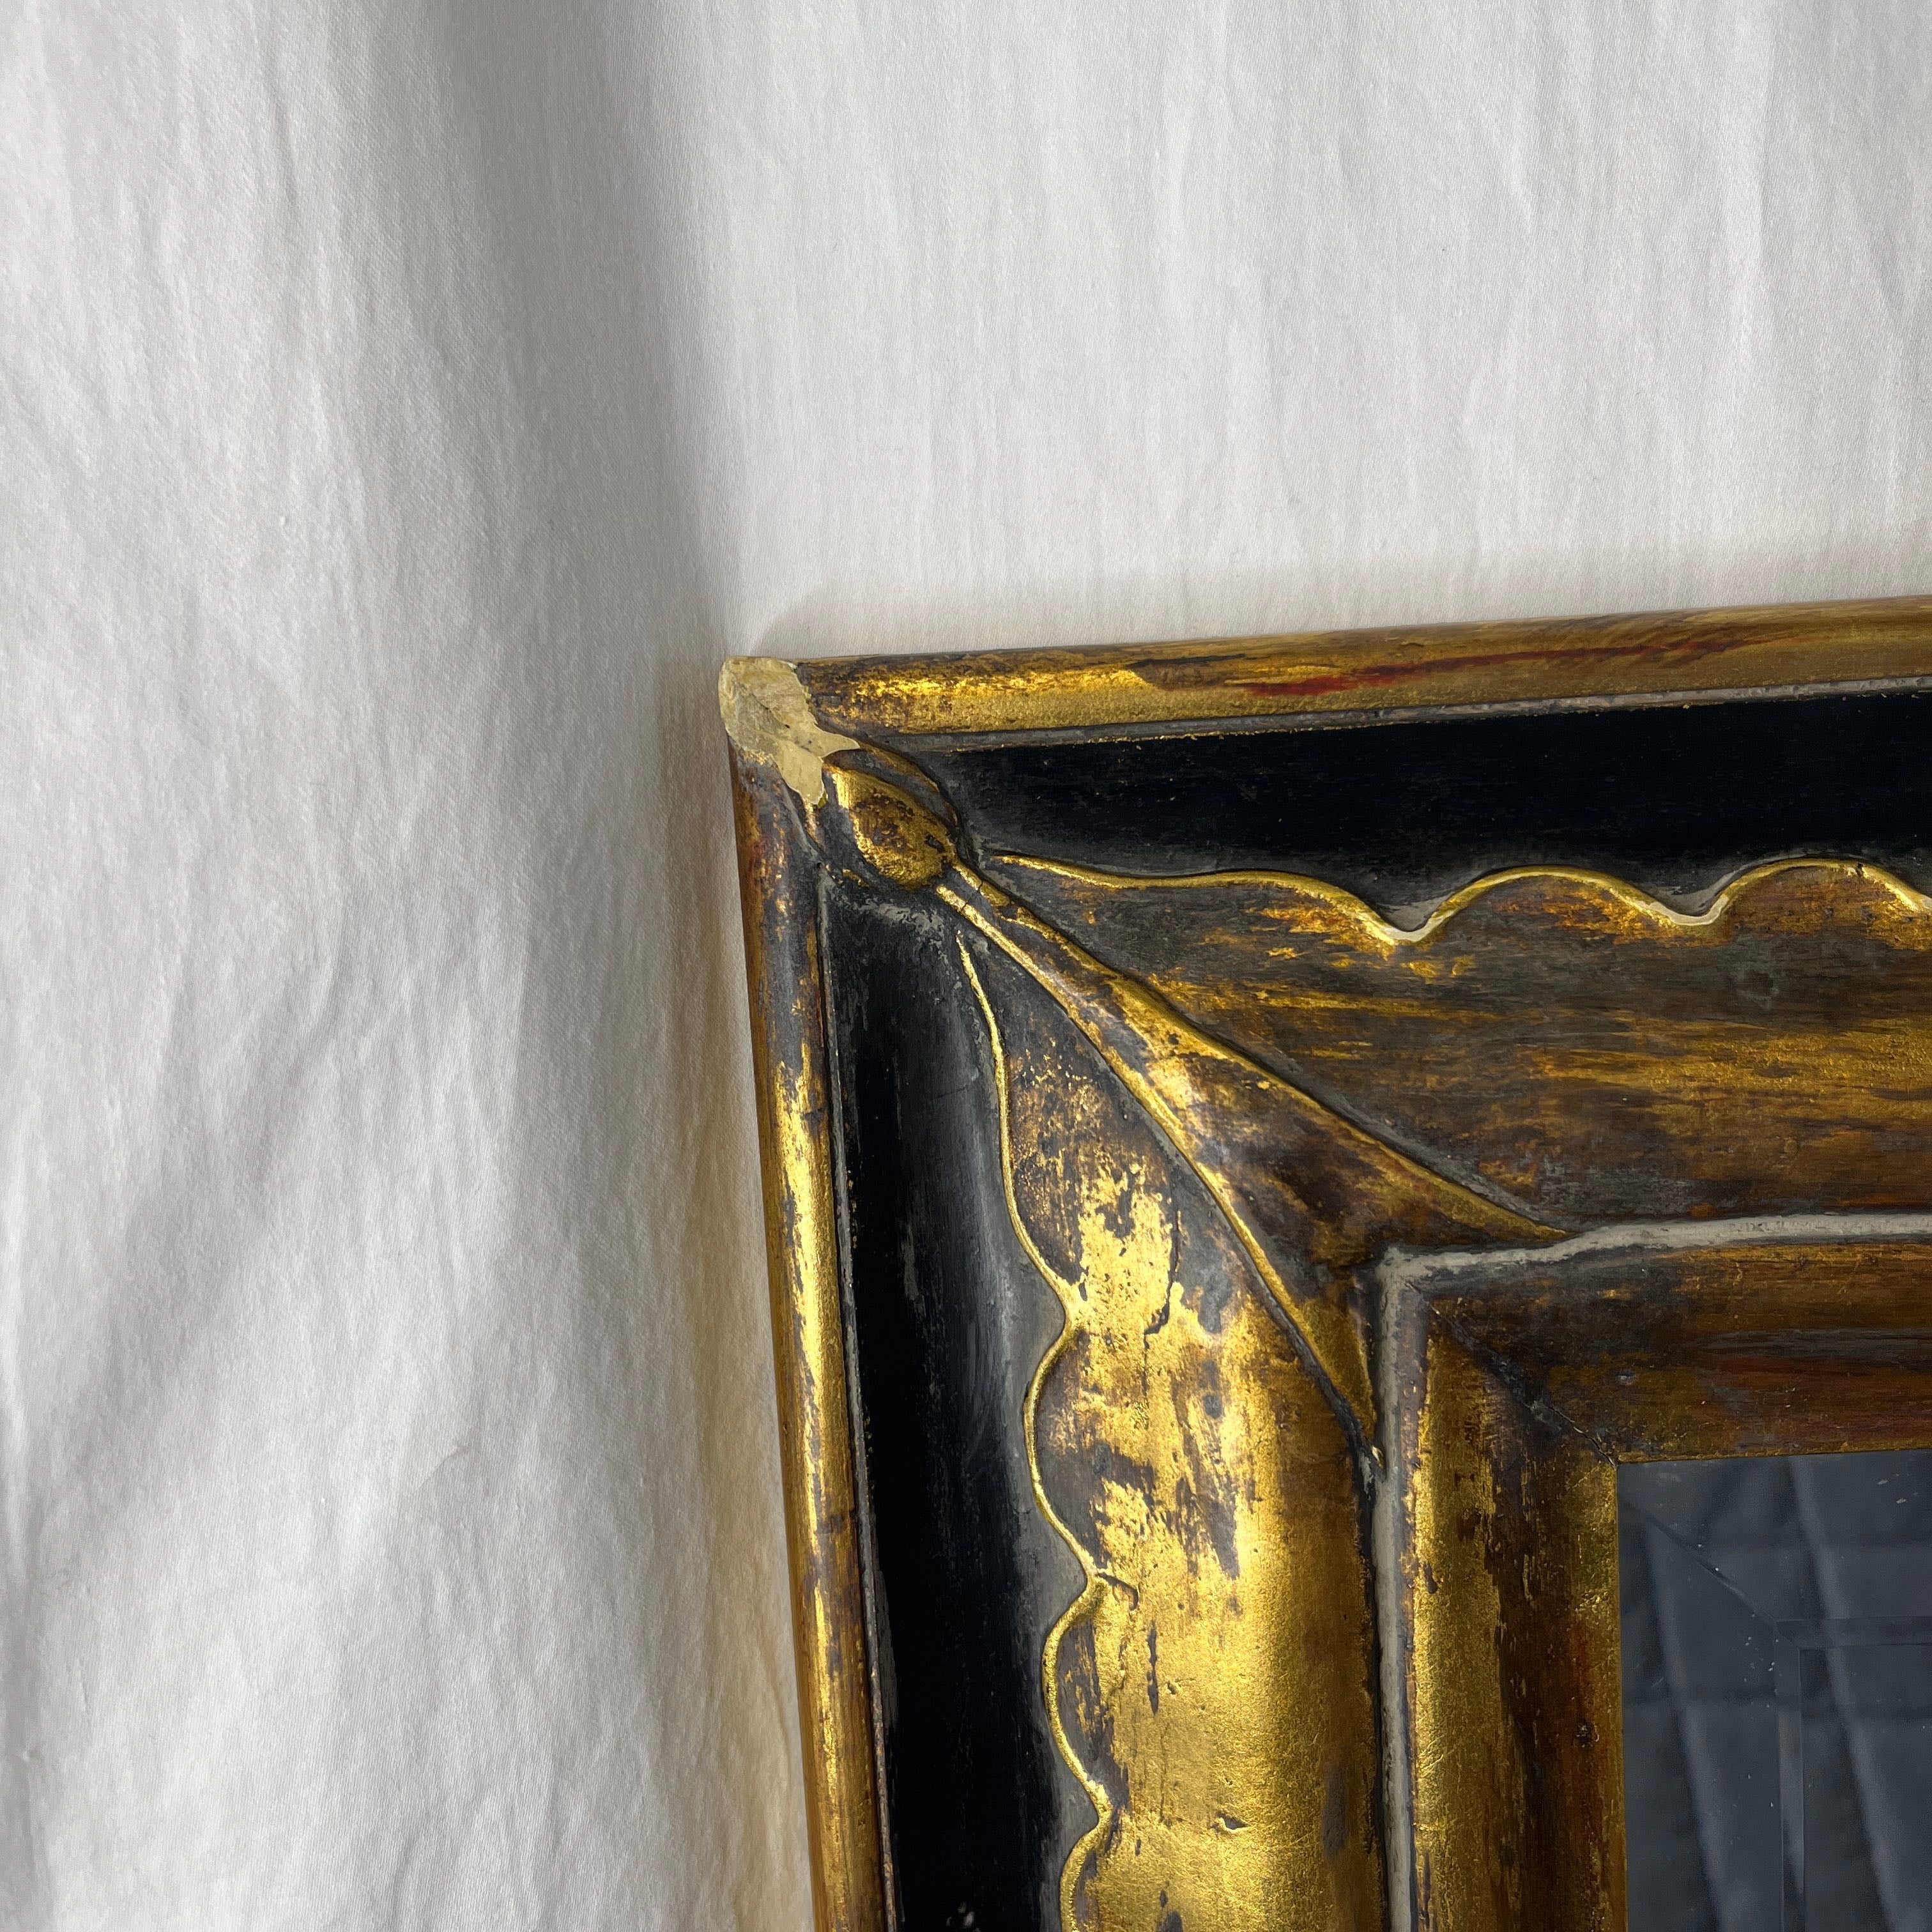 Decorative Arts Inc. Dual Hang Black Gold with Patina Framed Beveled Wall Hanging Mirror